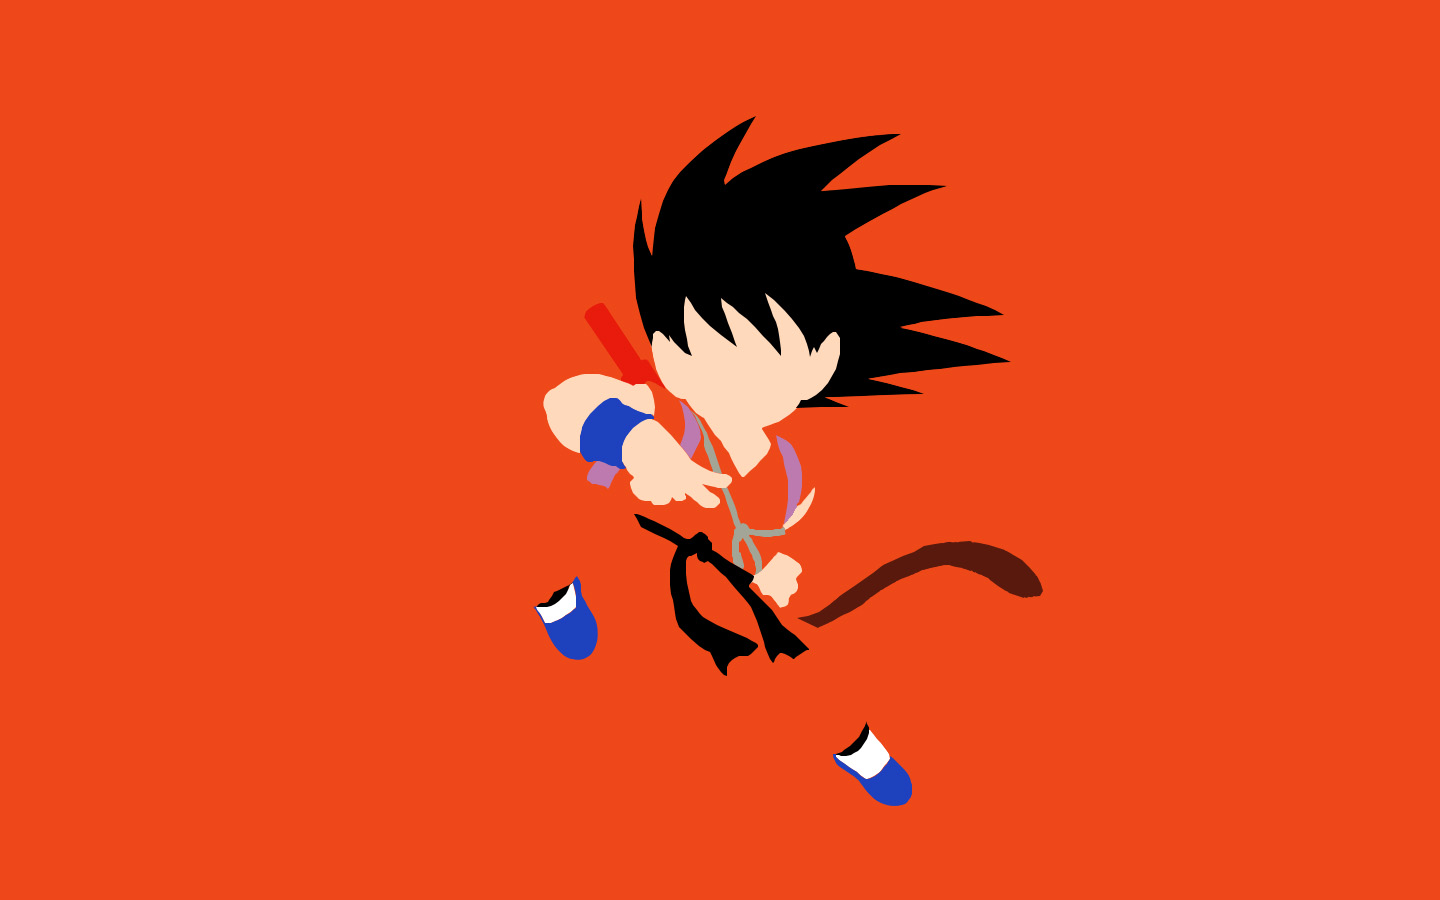 Kid Goku (Ver. 2) | Dragon Ball Z by UzumakiAsh on DeviantArt